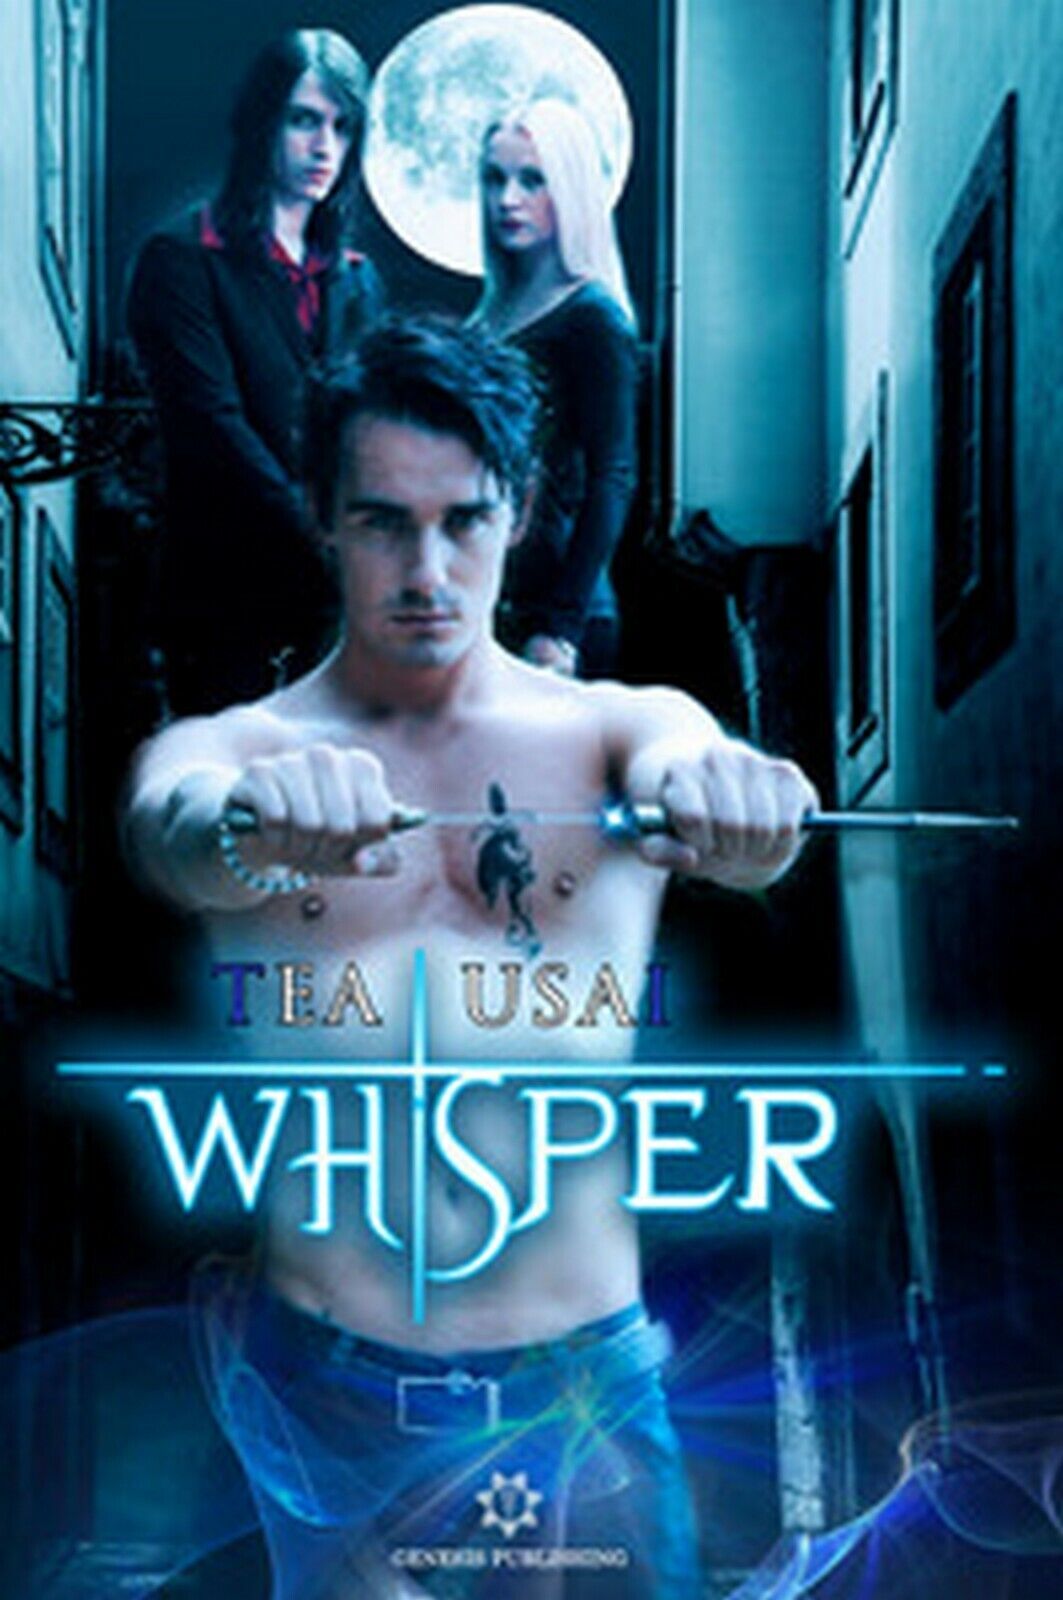 Whisper. Segrets saga  di Tea Usai,  2019,  Genesis Publishing